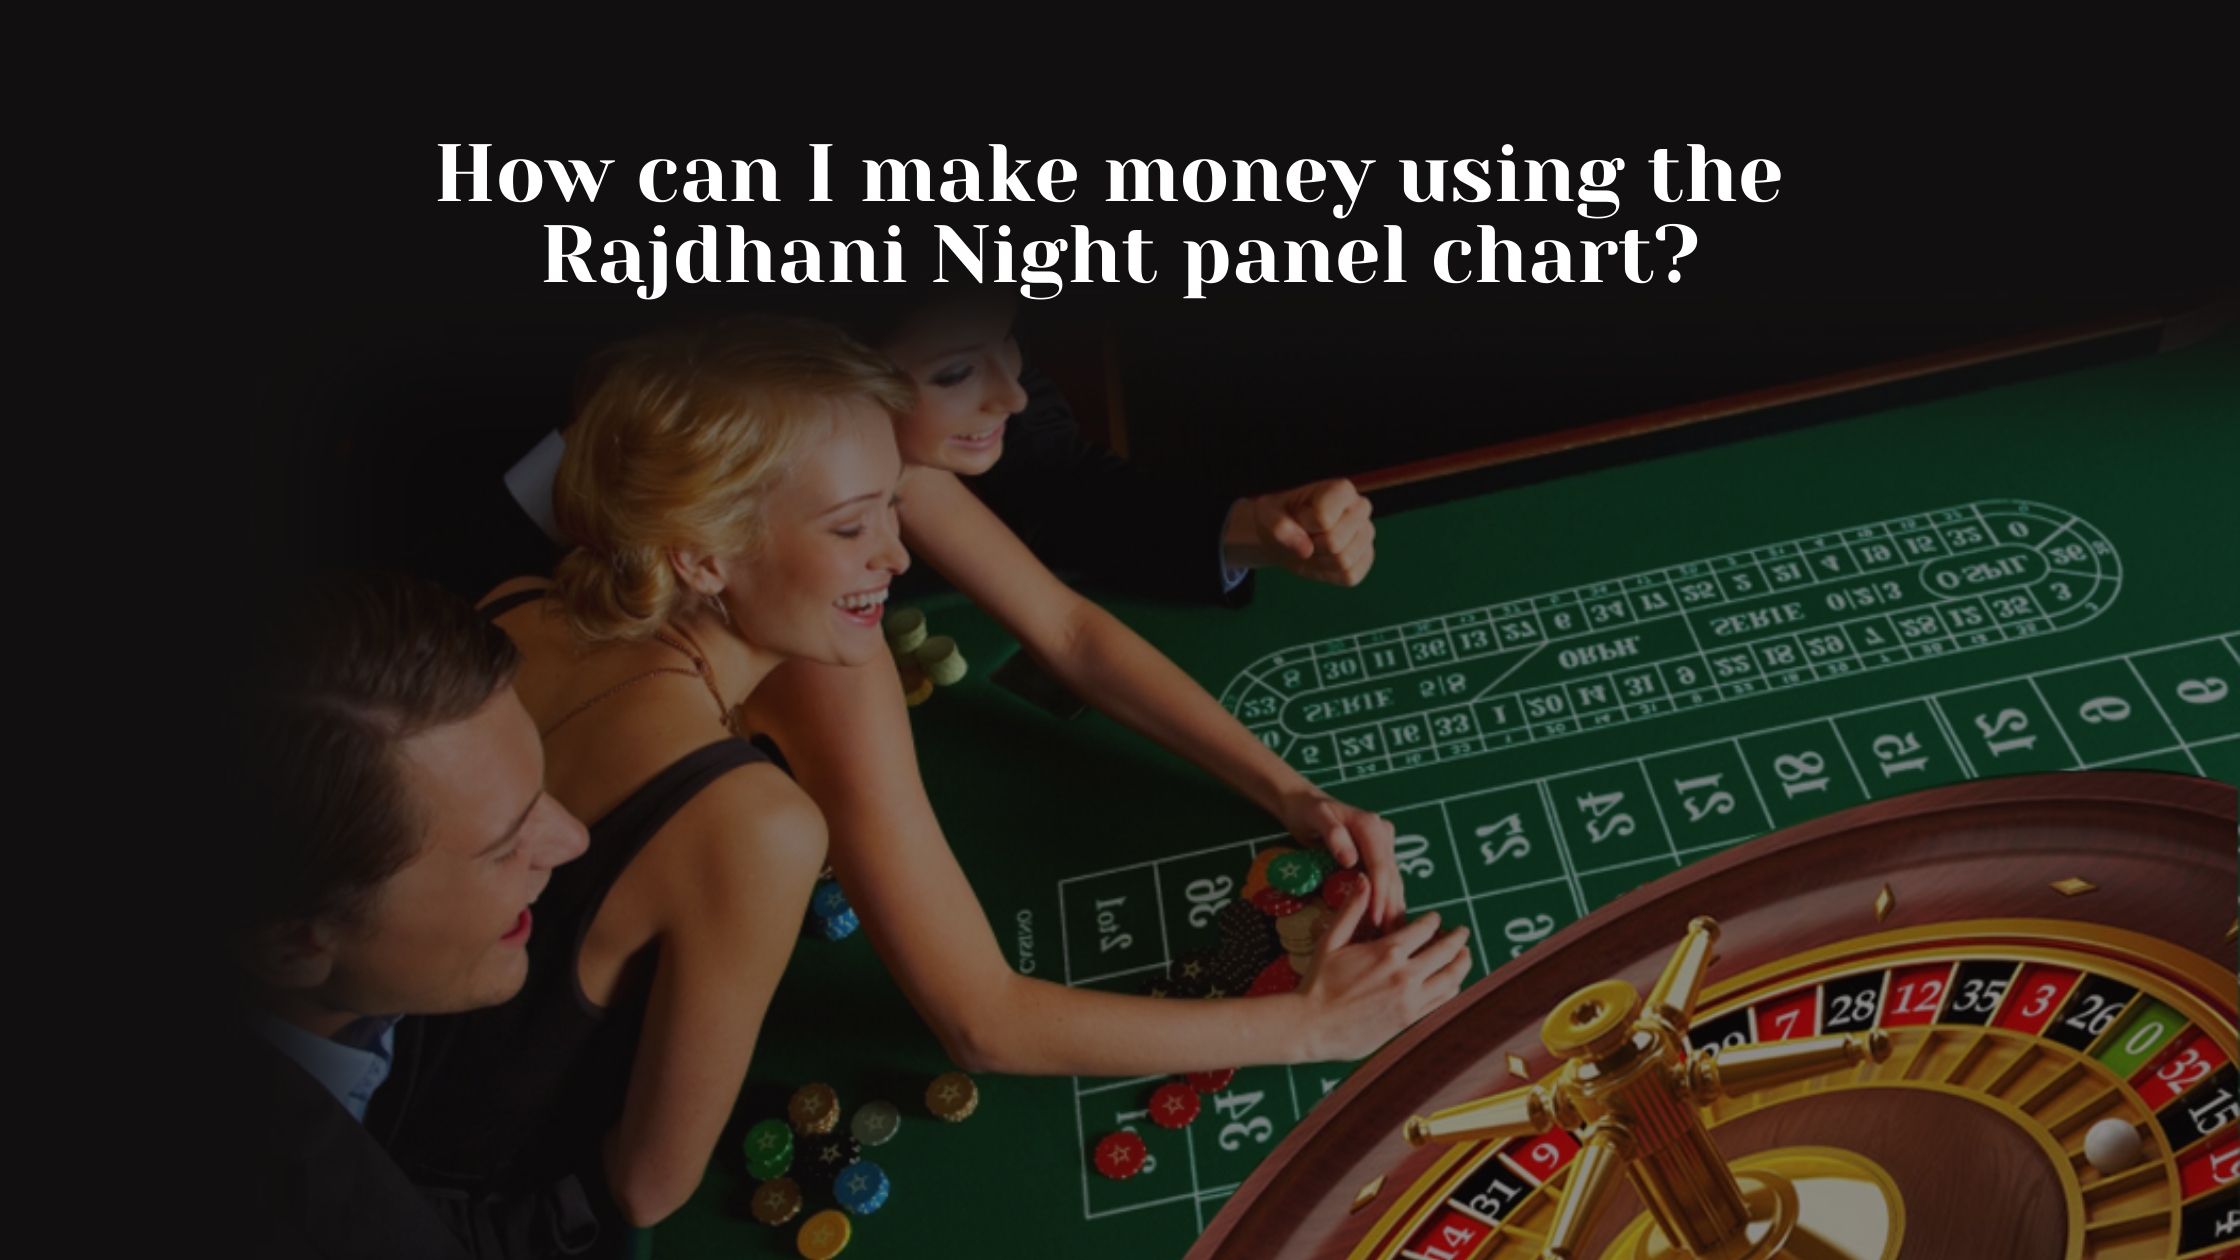 How can I make money using the Rajdhani Night panel chart?